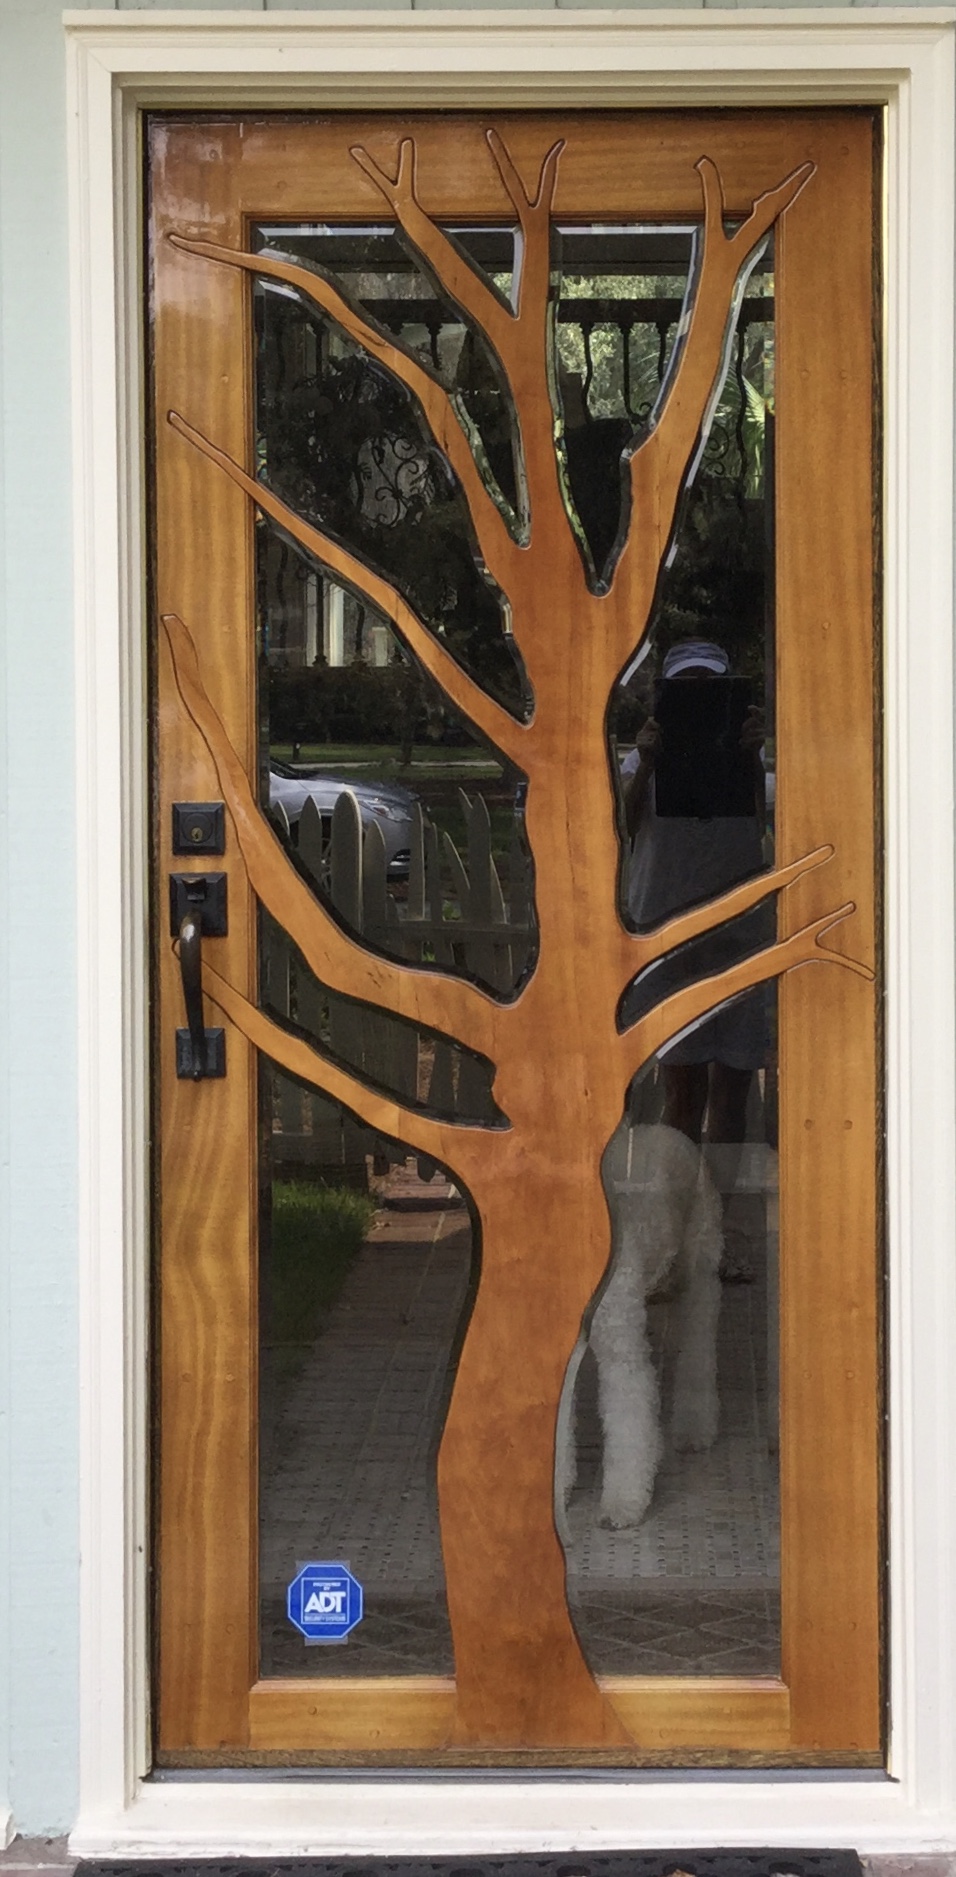 Inlayed door with beveled glass